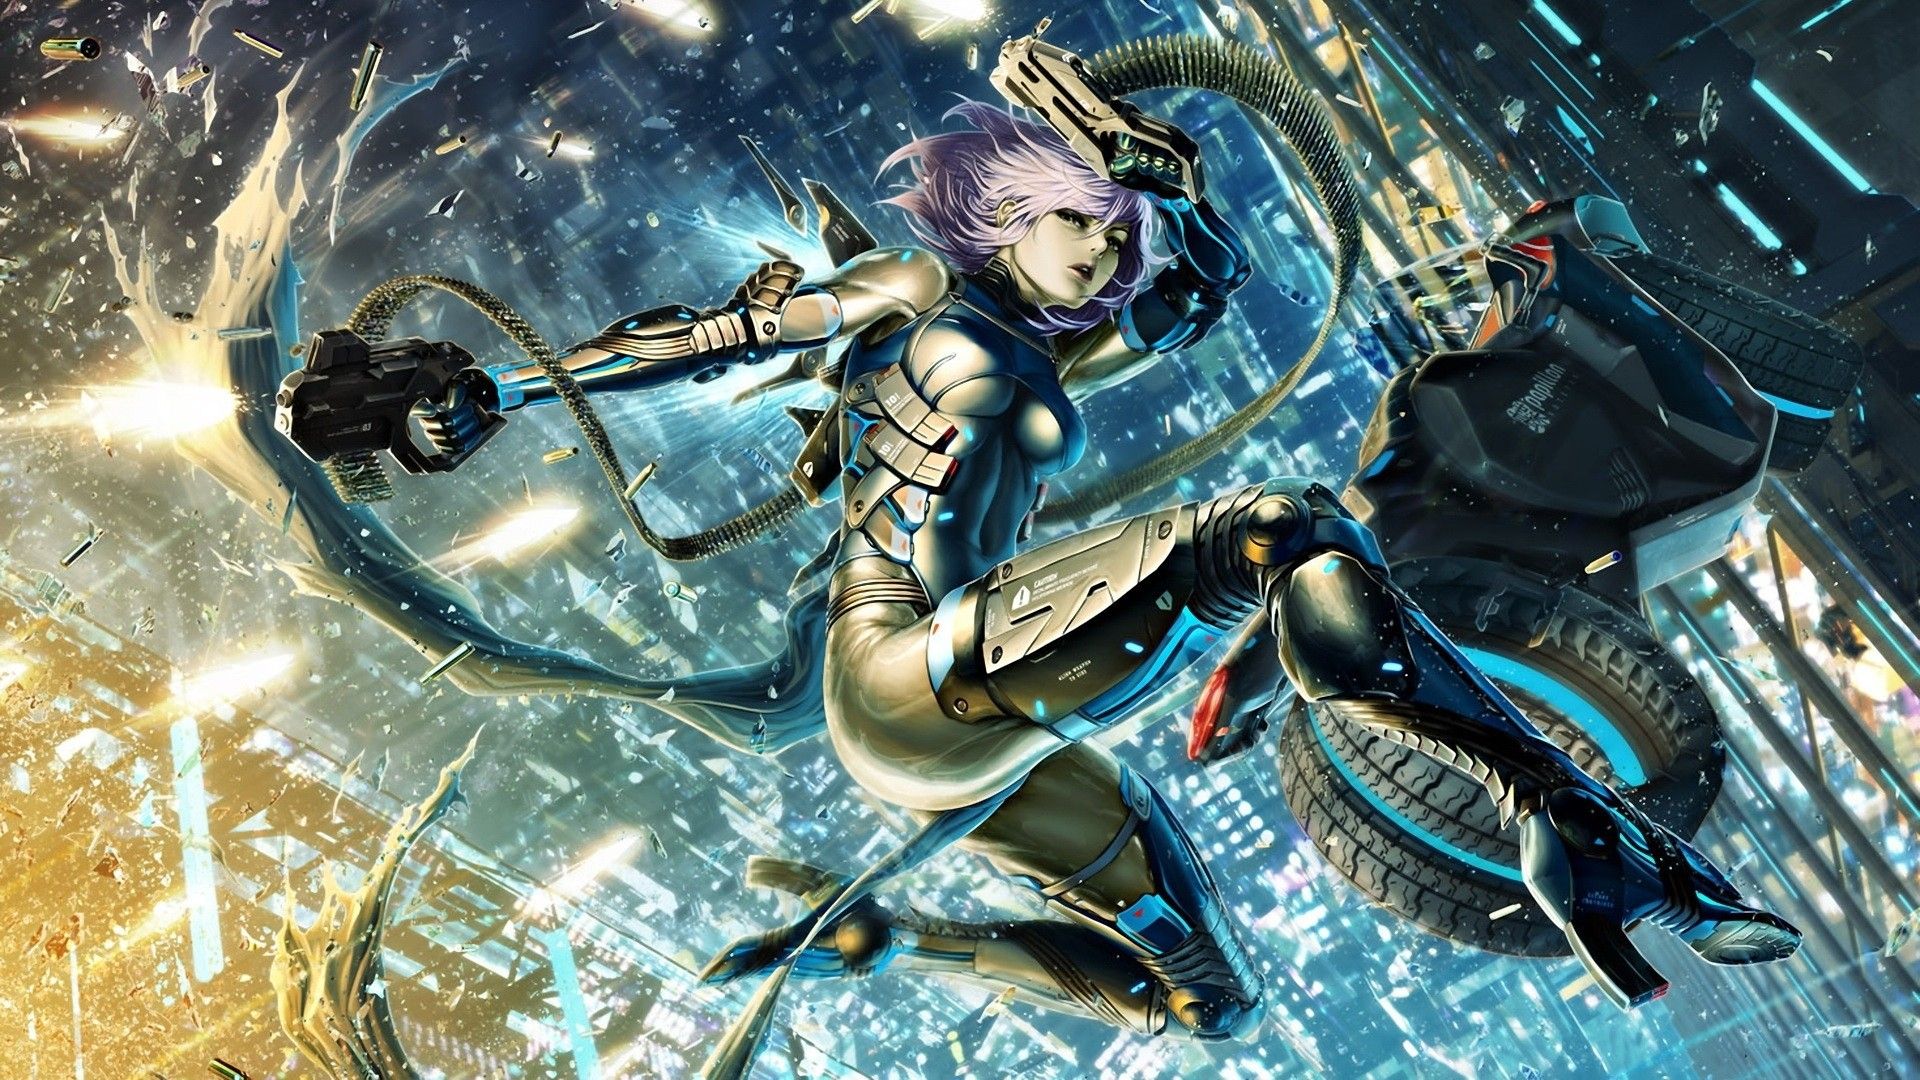 Download 1920x1080 Futuristic, Cyberpunk, Anime Girls, Fight wallpaper